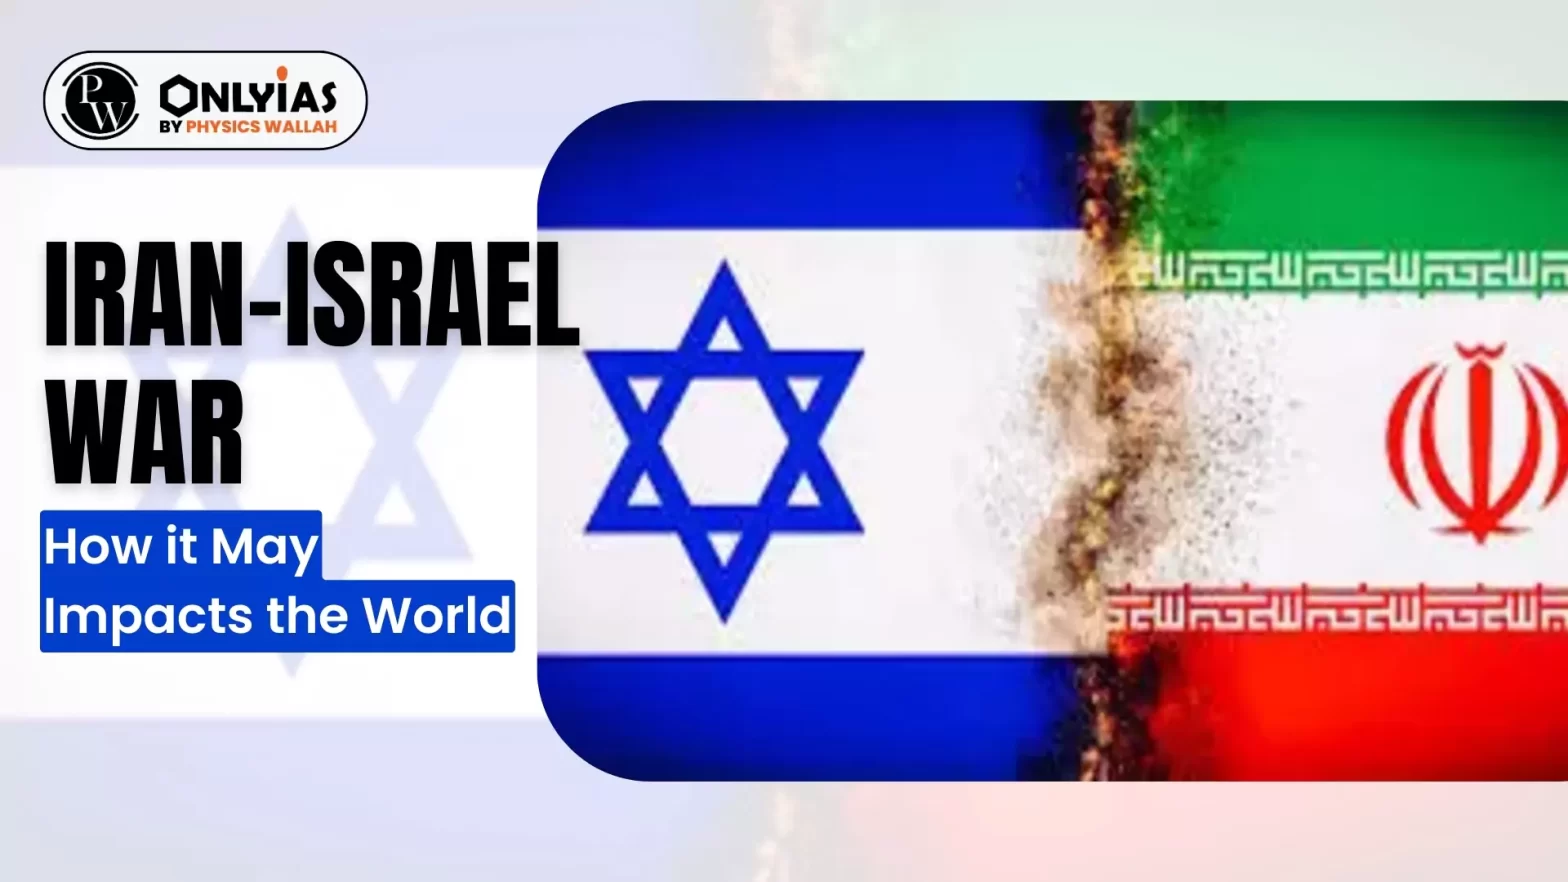 Iran-Israel War: How it May Impacts the World